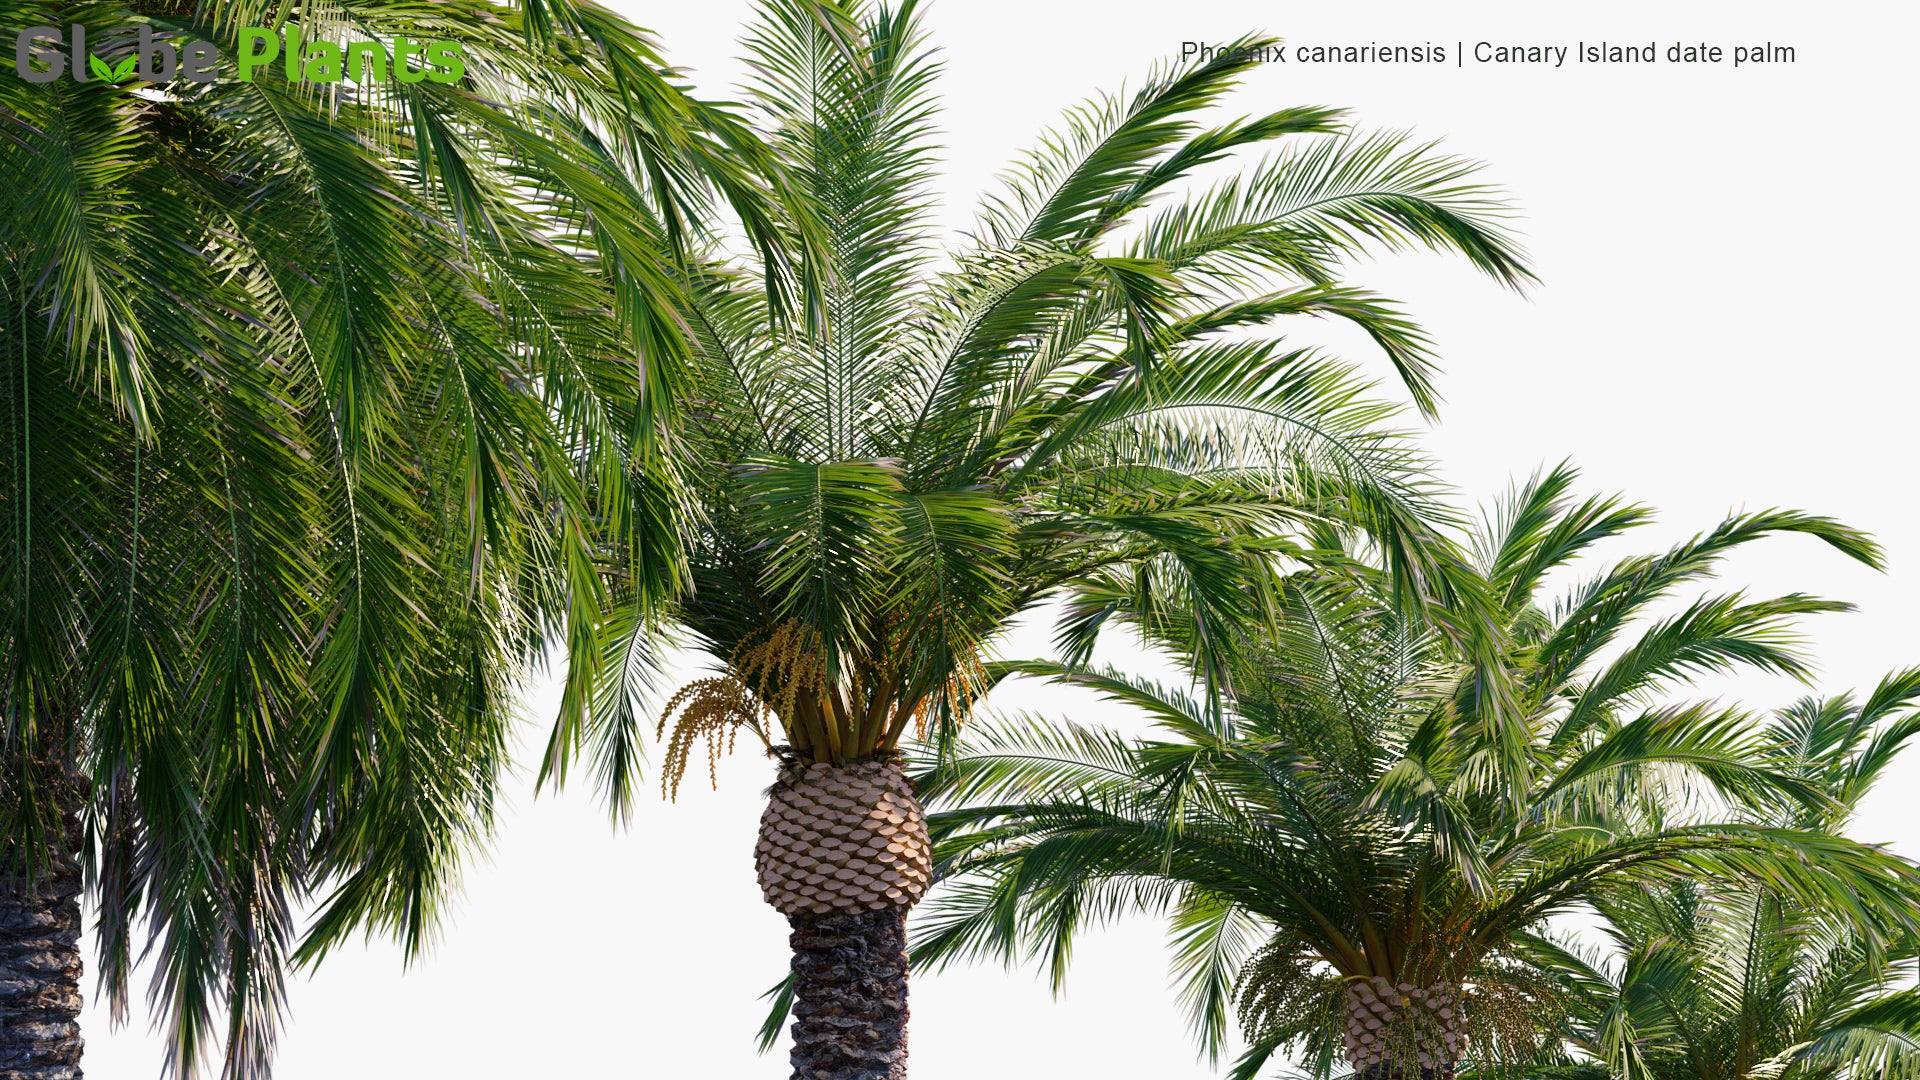 Phoenix Canariensis - Canary Island Date Palm, Pineapple Palm